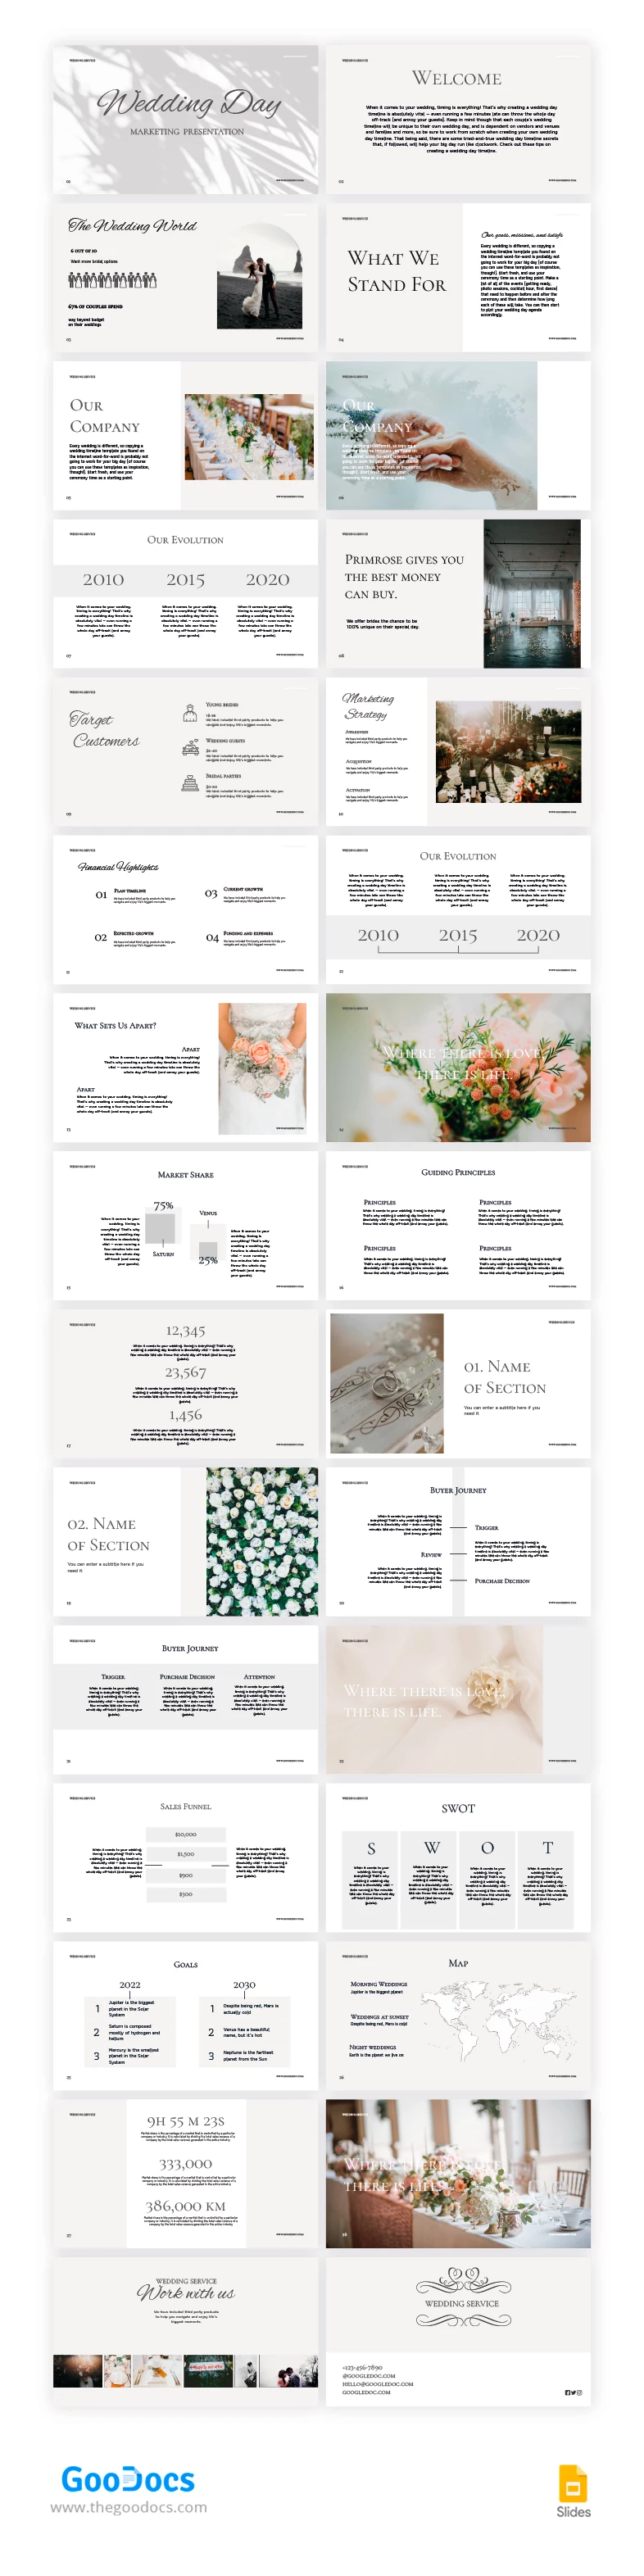 Ästhetischer Hochzeitstag - free Google Docs Template - 10066986